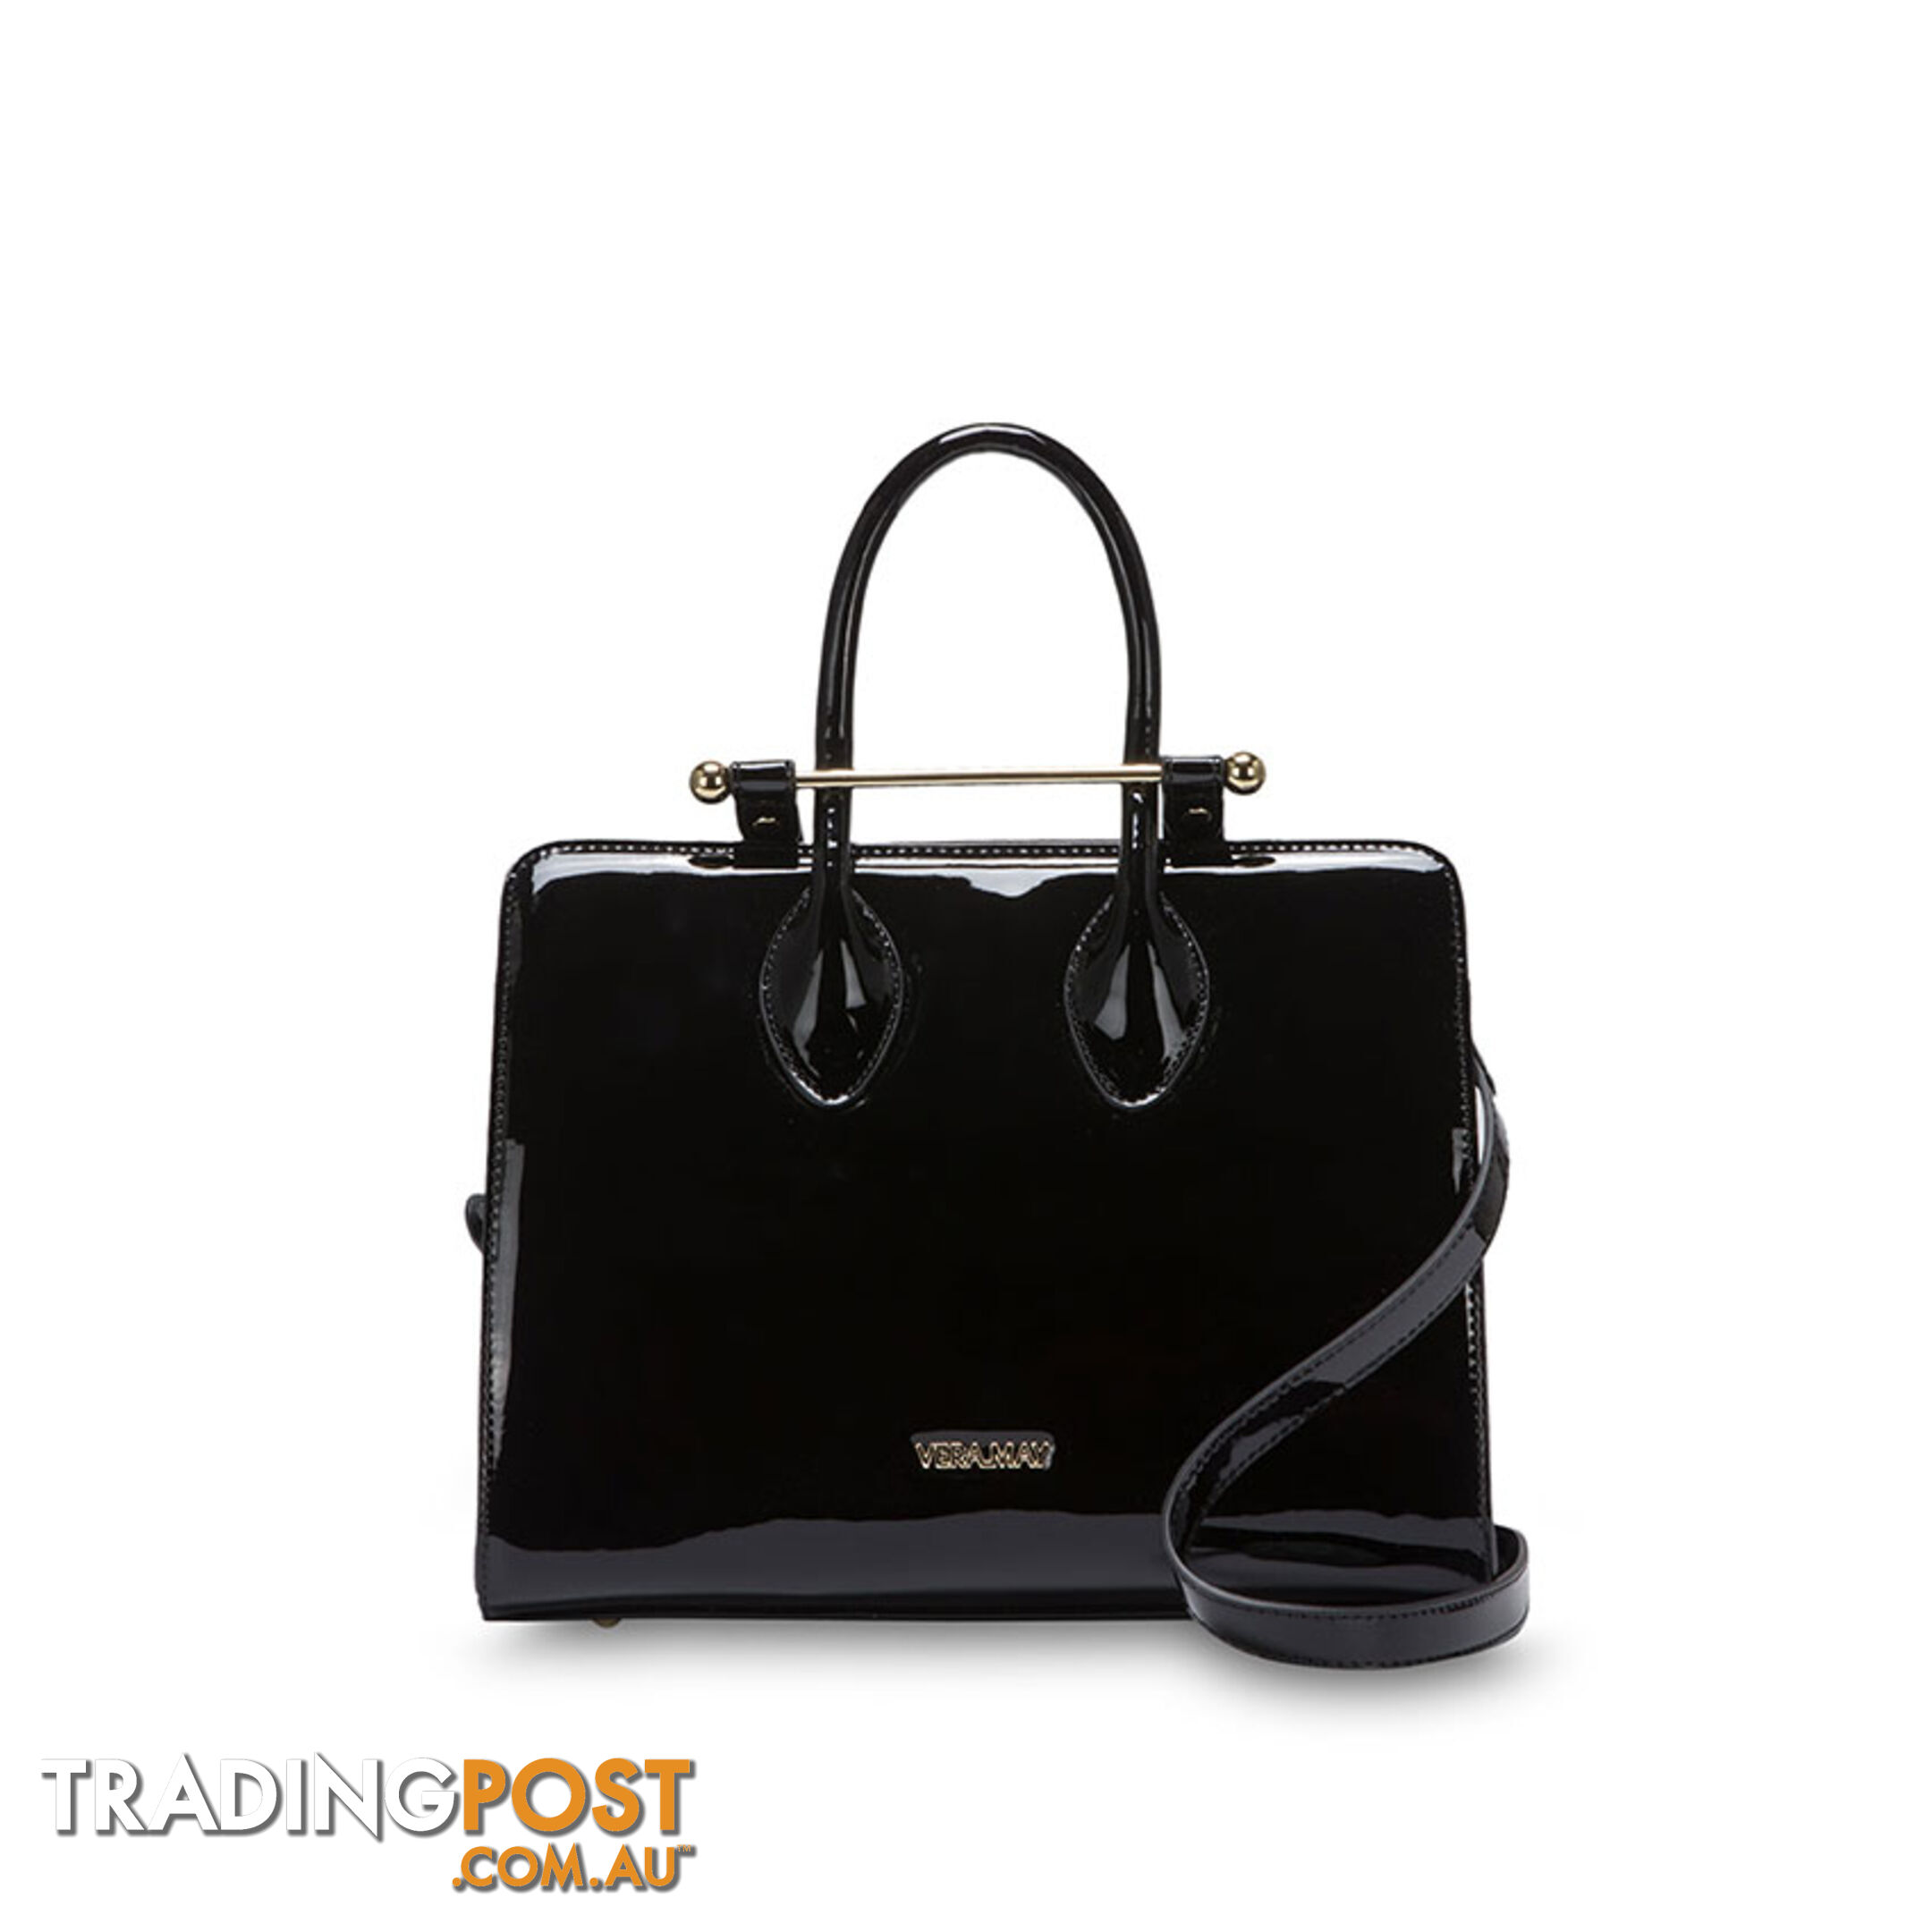 MERRIN Patent Black Luxe Designer Womens Handbag